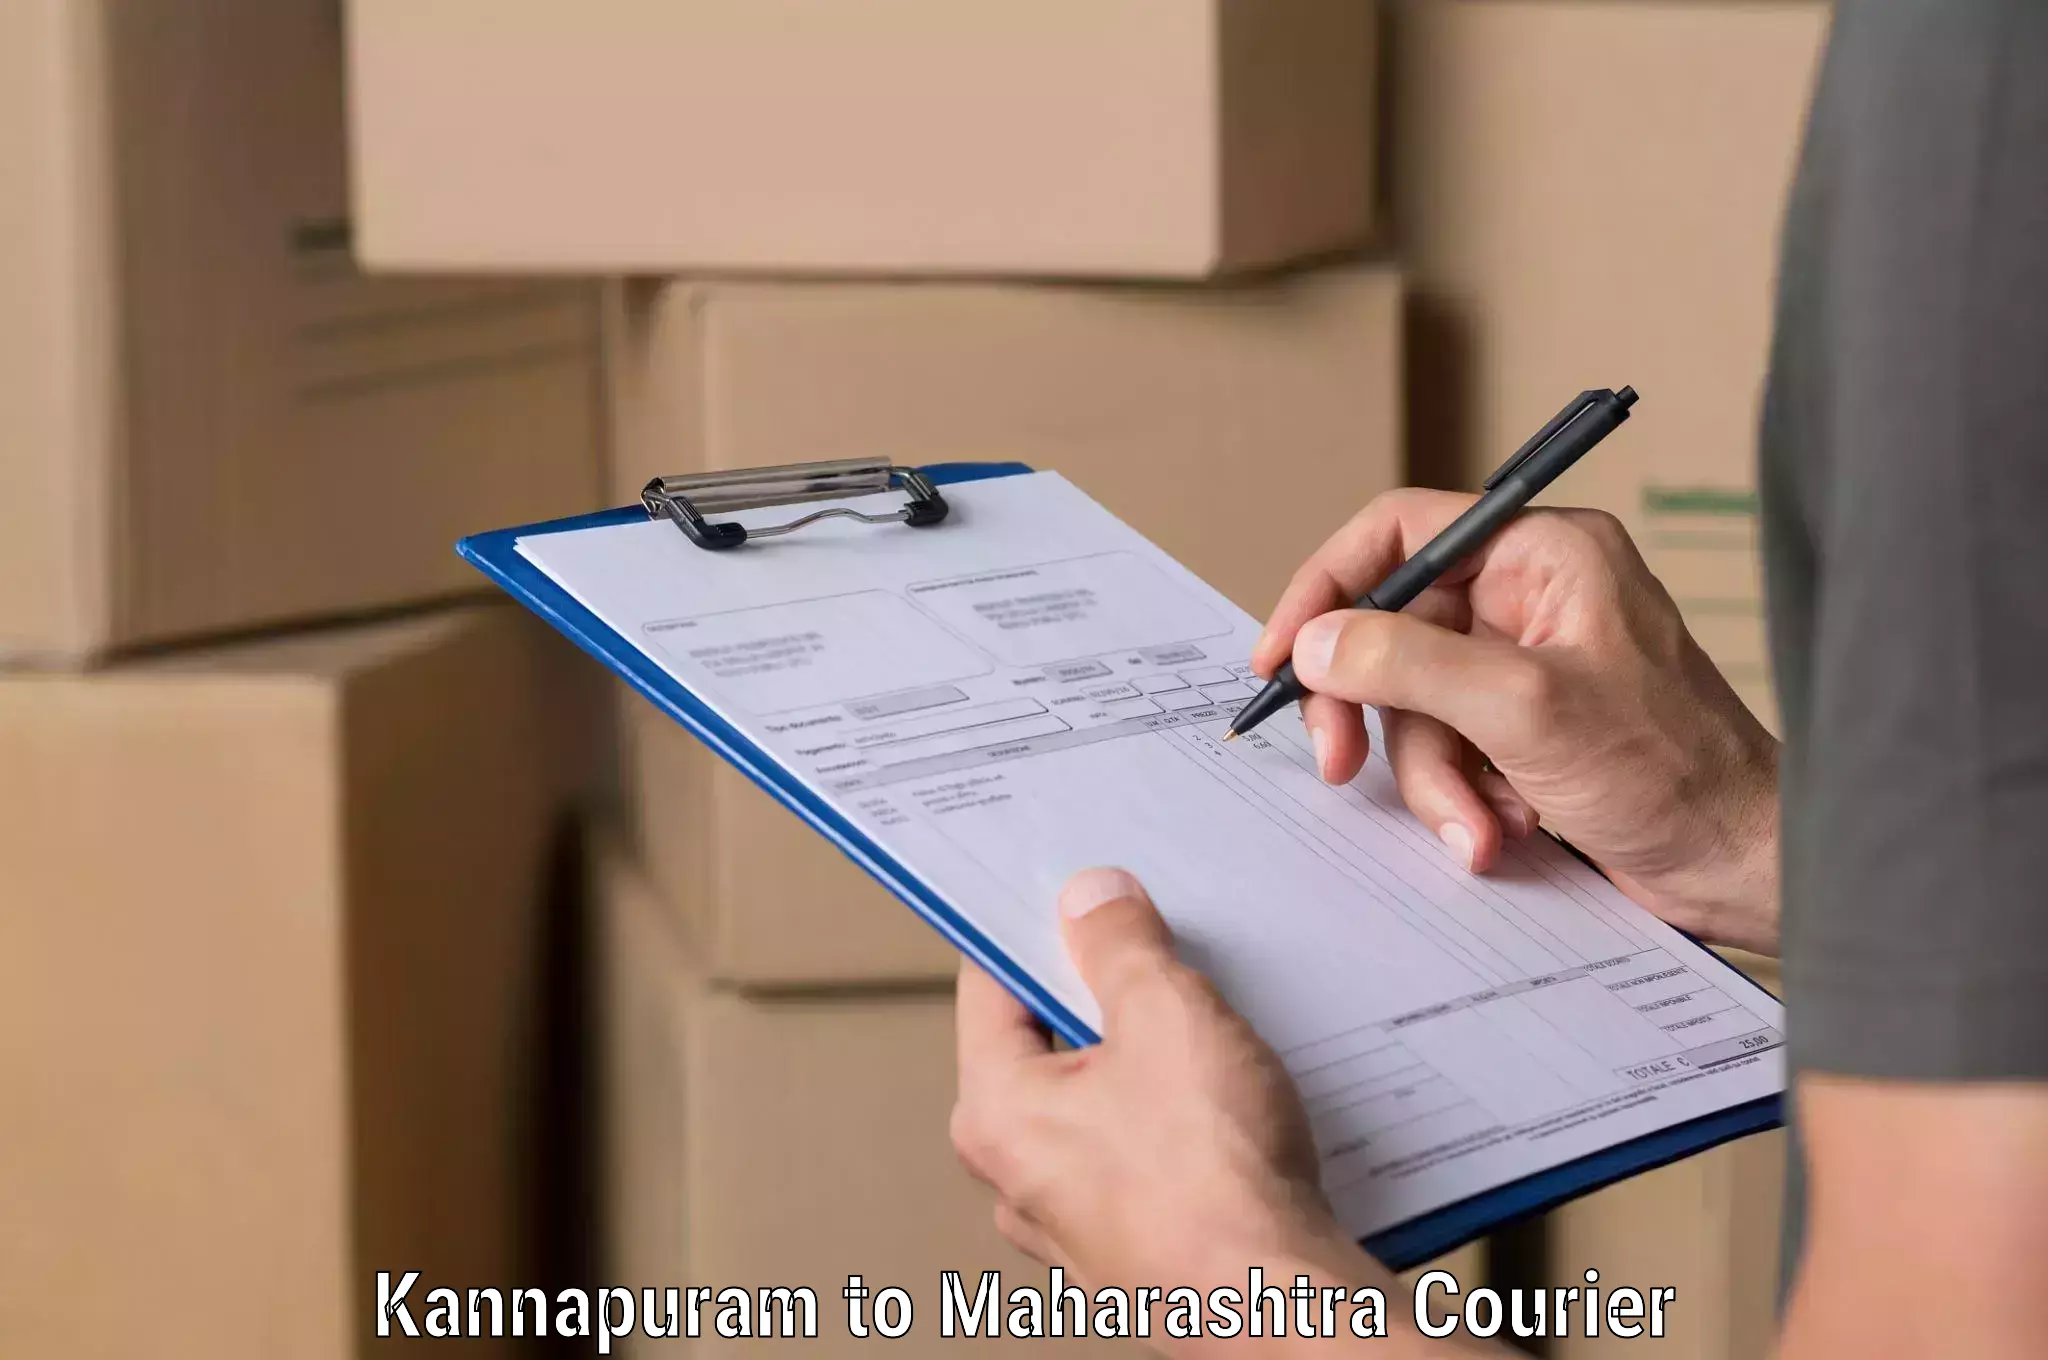 Efficient freight service Kannapuram to Maharashtra